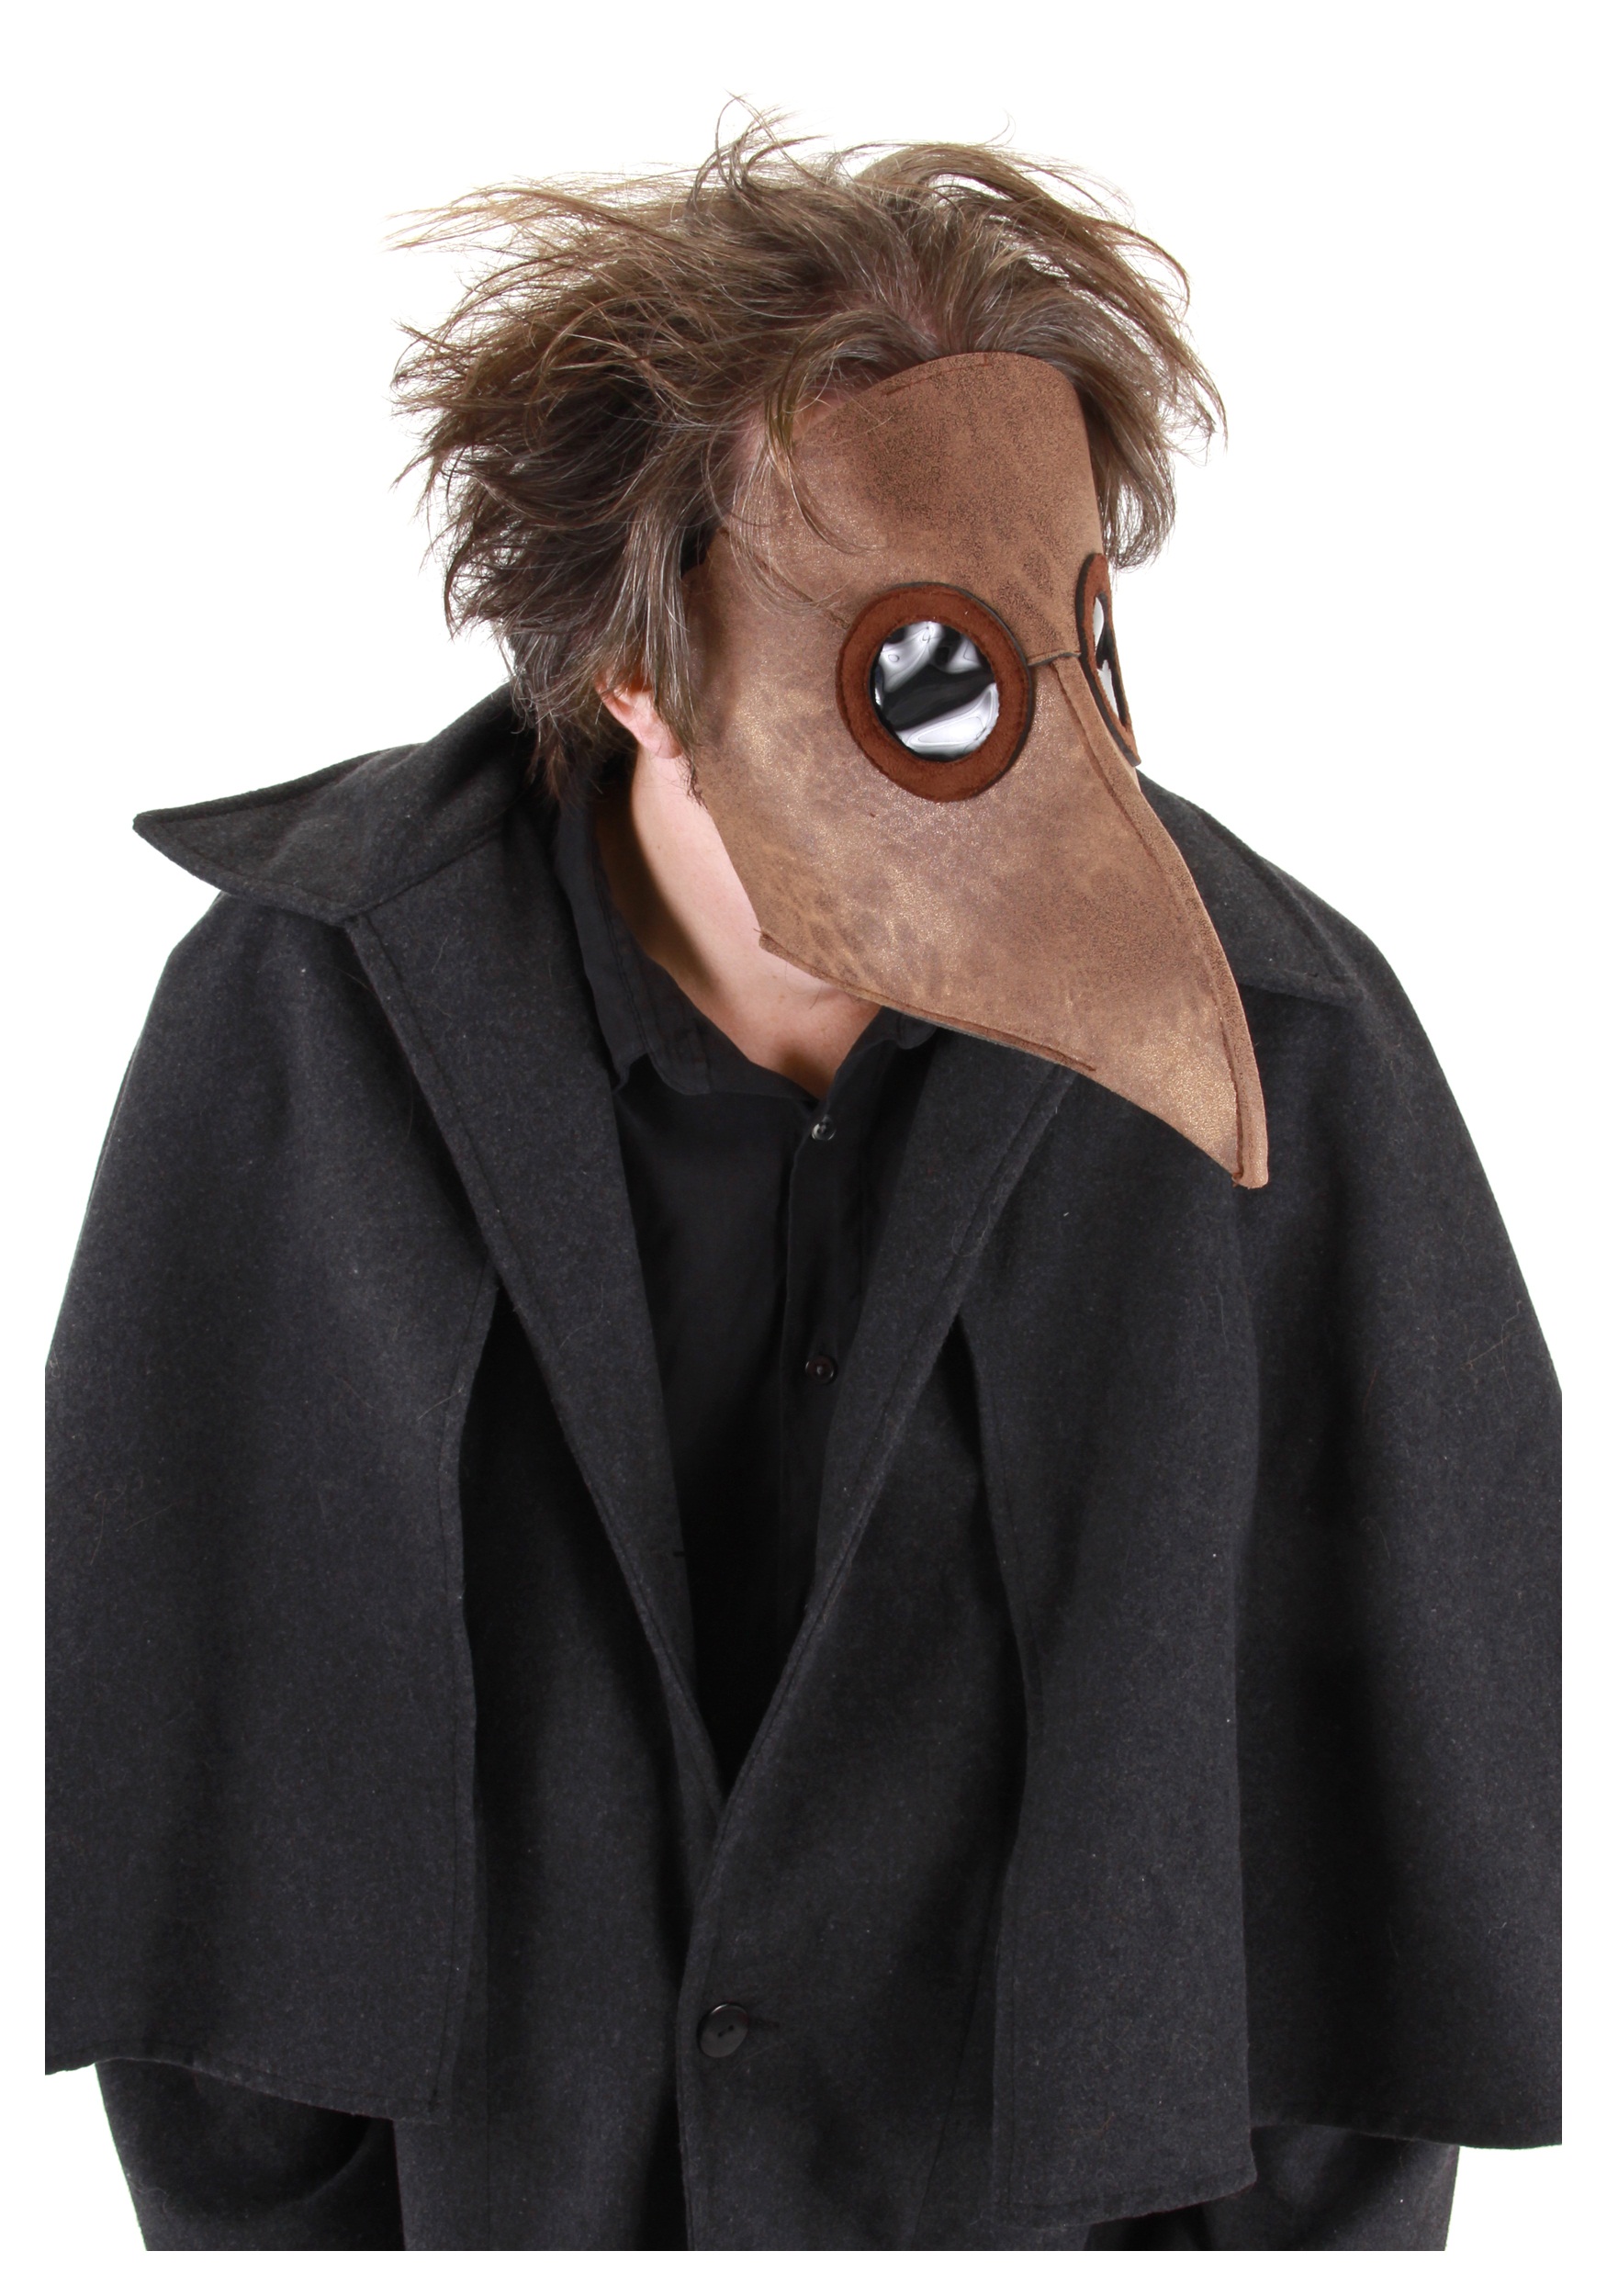 black plague doctor mask real